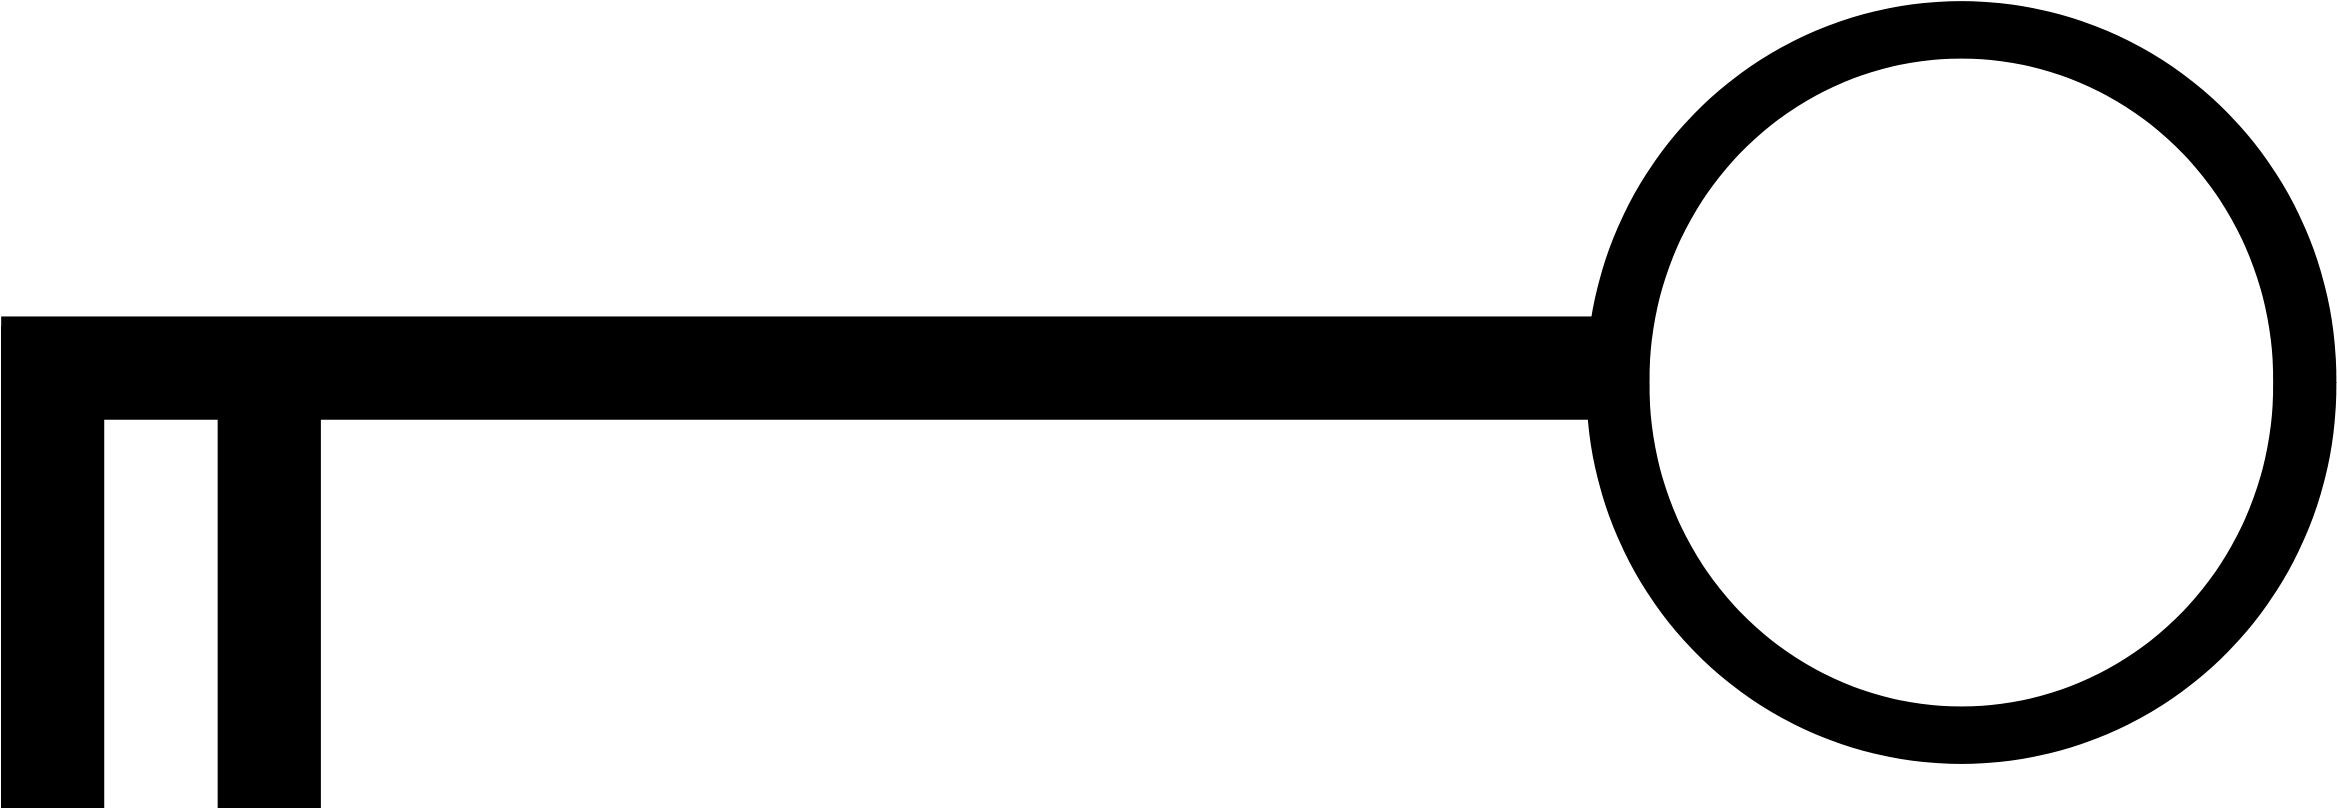 Simple Skeleton Key Clipart - Symbol Of A Key (2400x879)